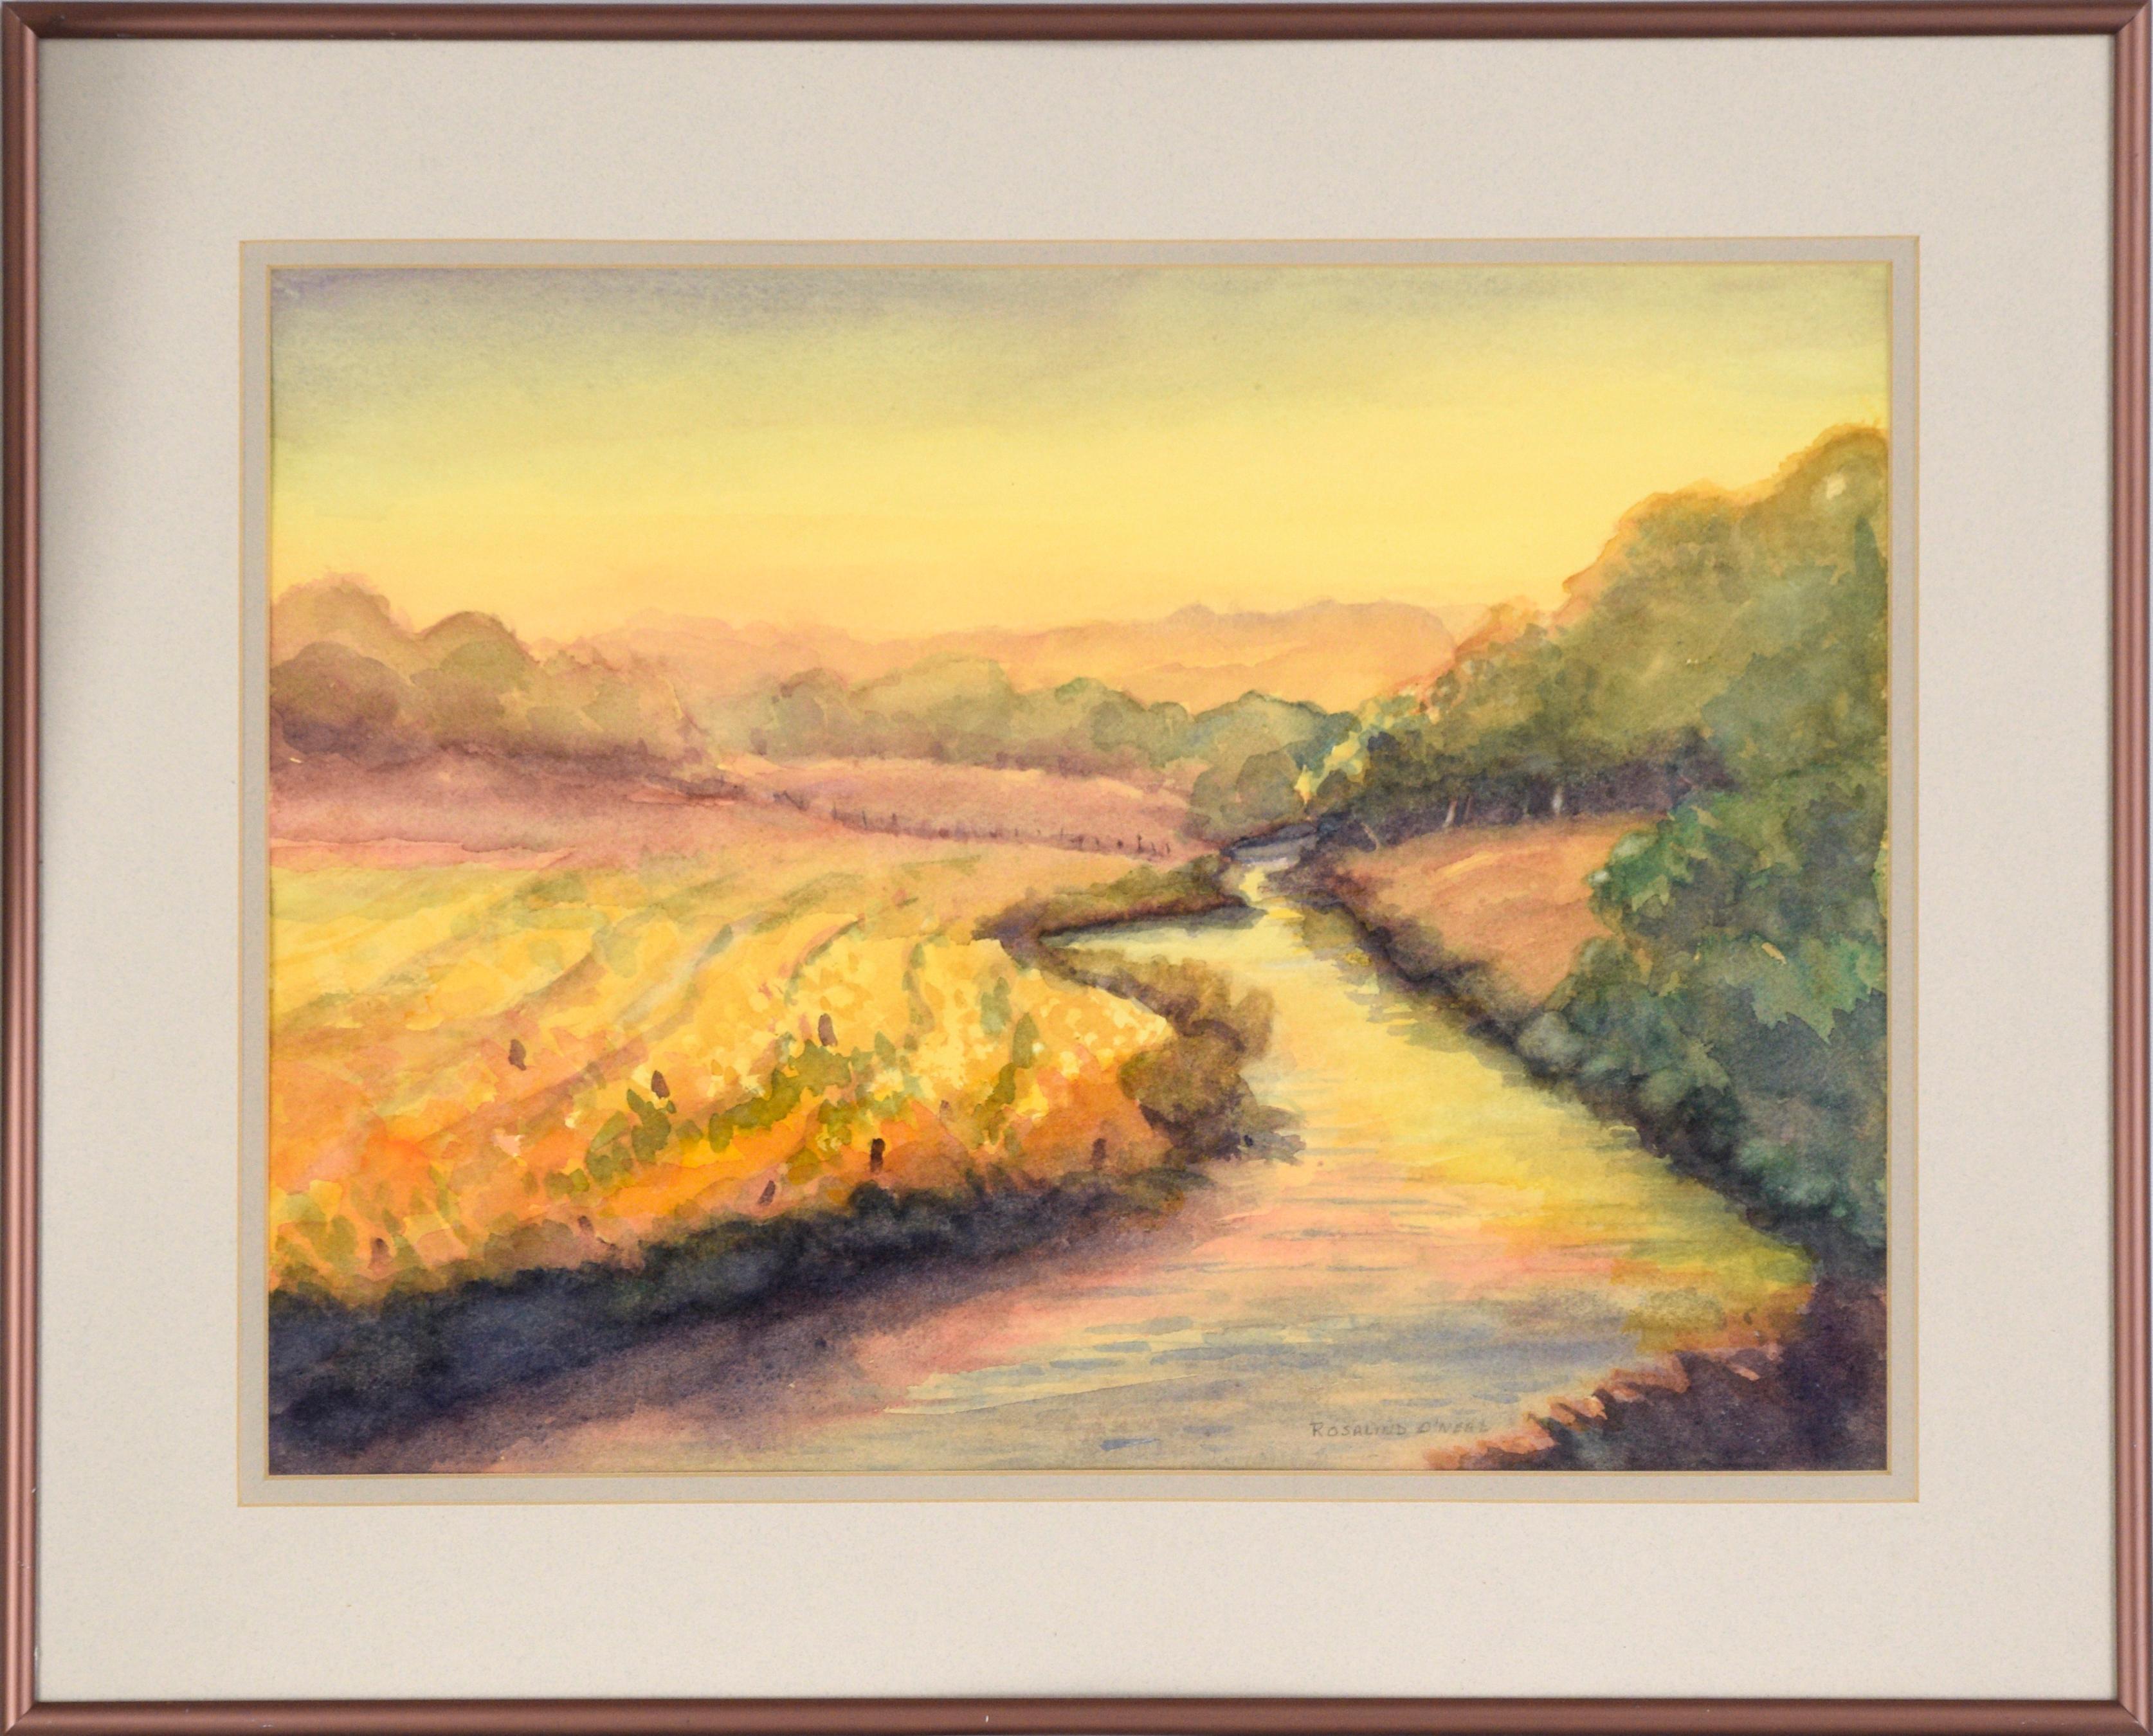 Golden Hour at the River – Aquarell-Landschaft auf Papier